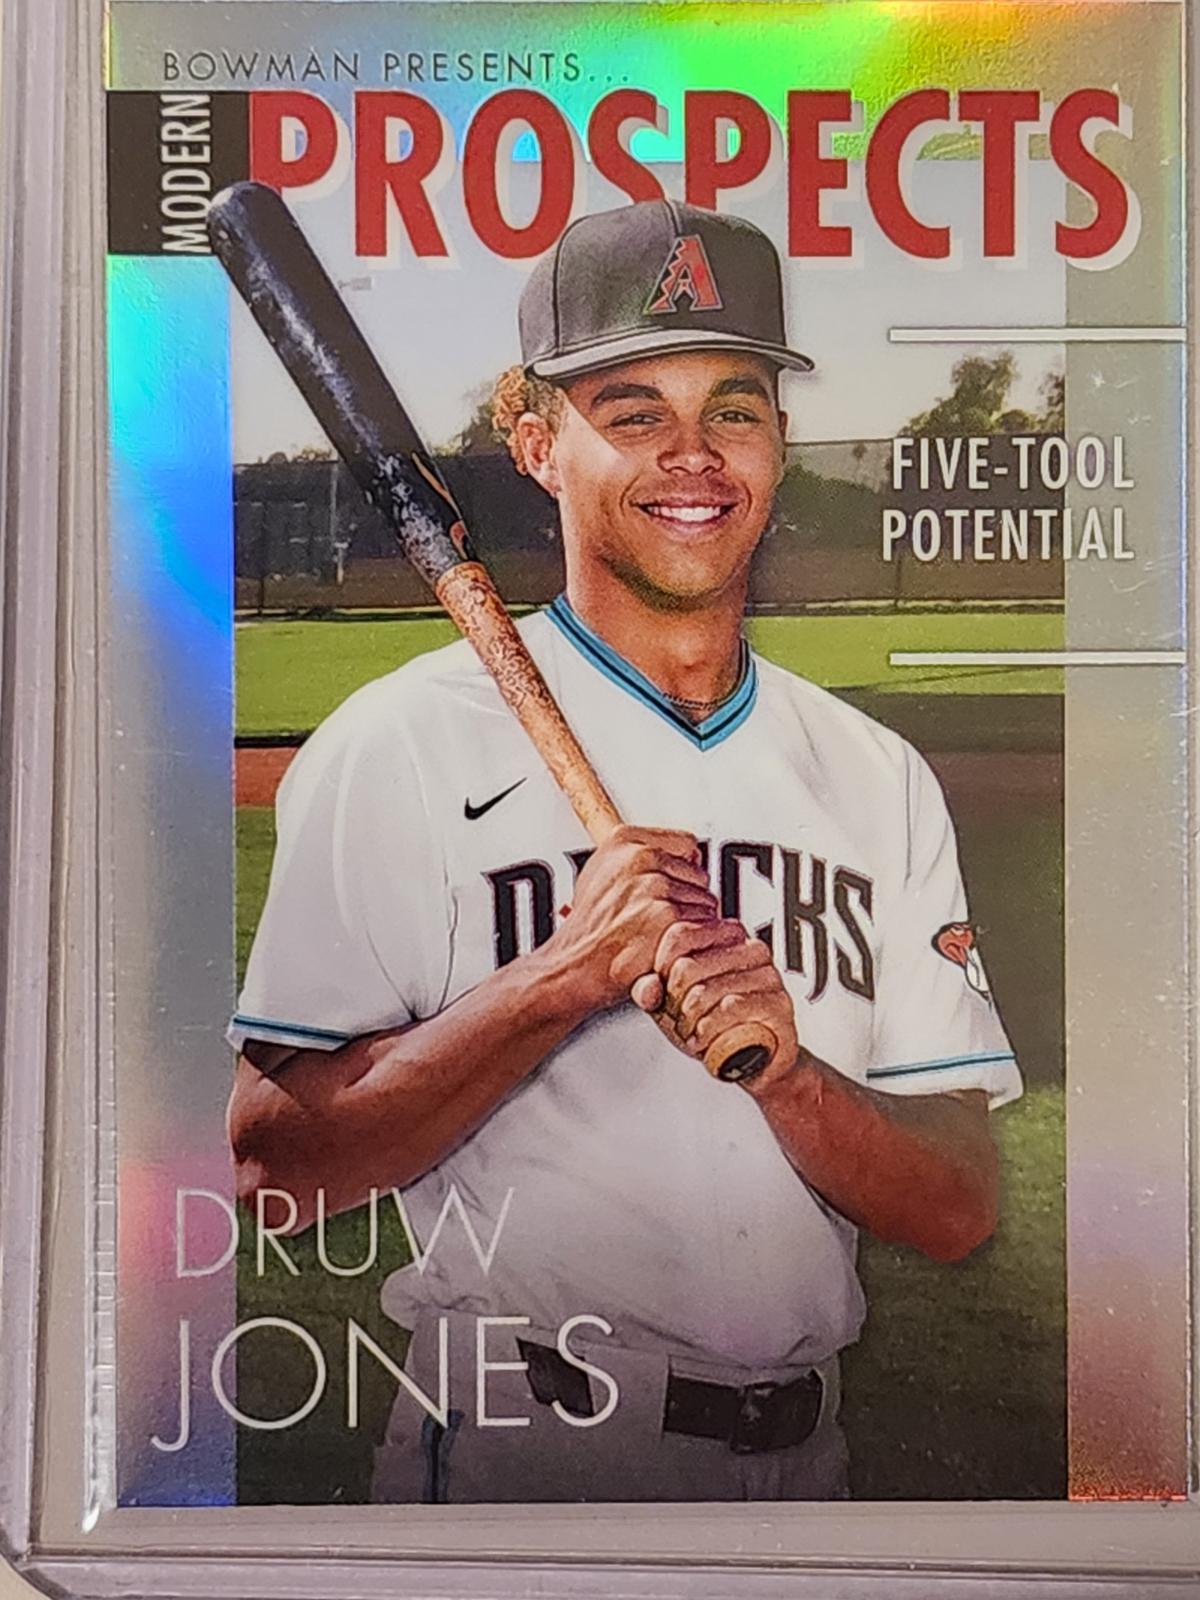 Druw Jones MP3 Prices 2023 Bowman Modern Prospects Baseball Cards